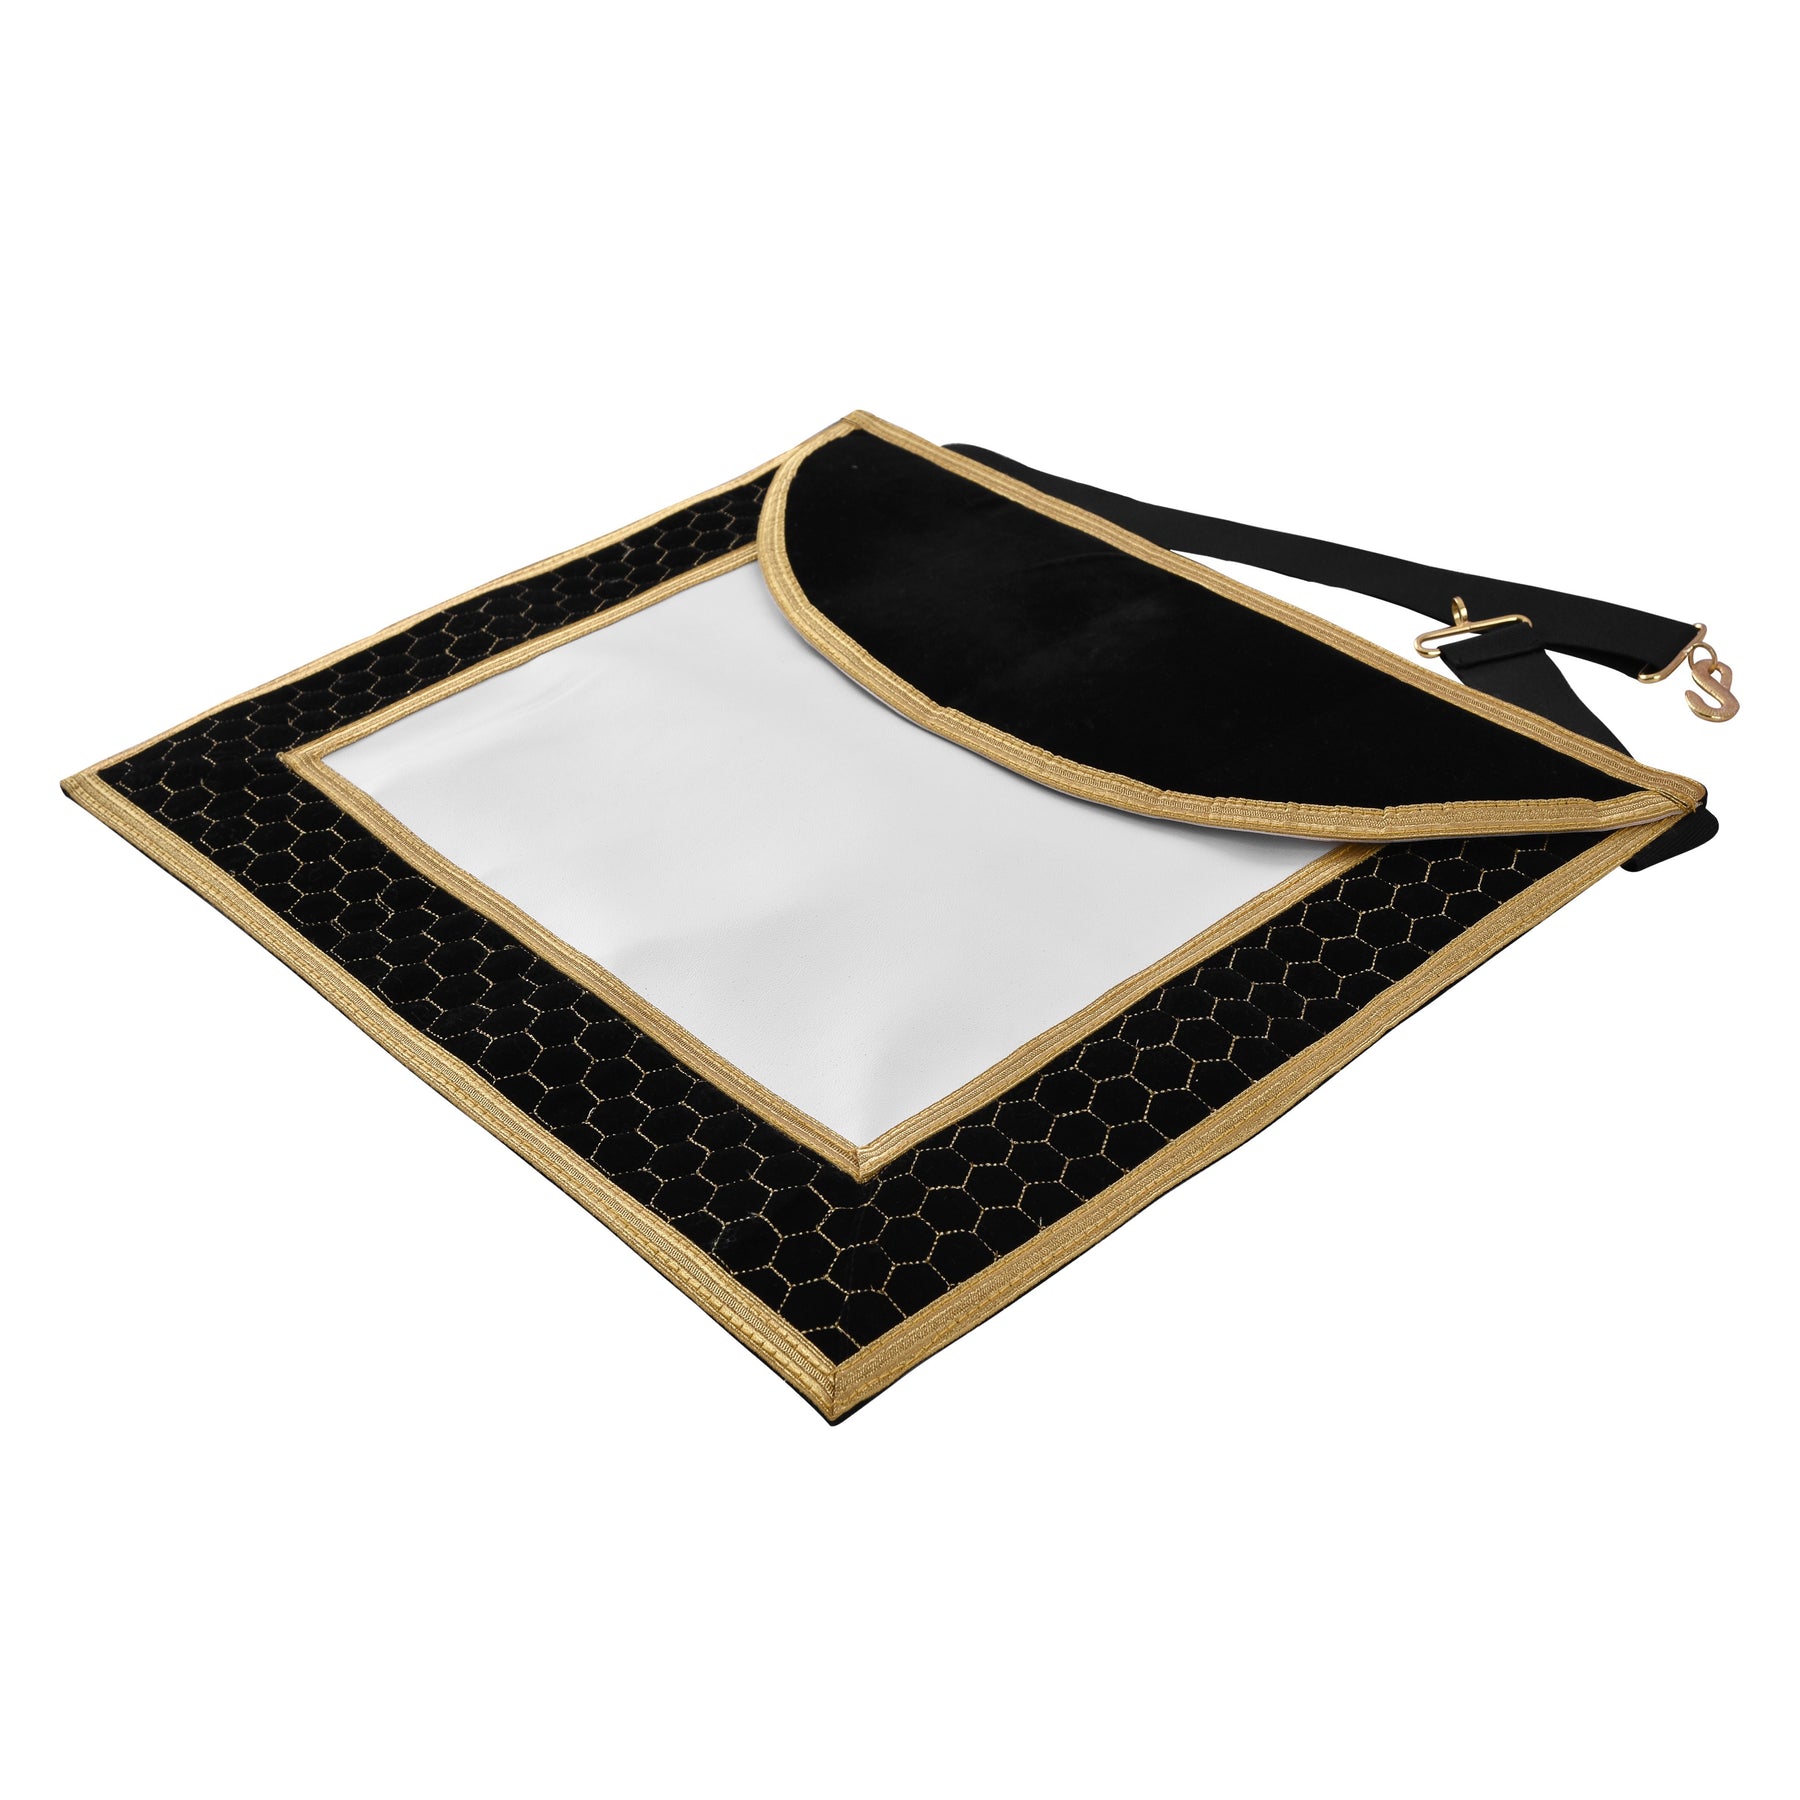 Scottish Rite Apron - Black Velvet With Gold Machine Embroidery